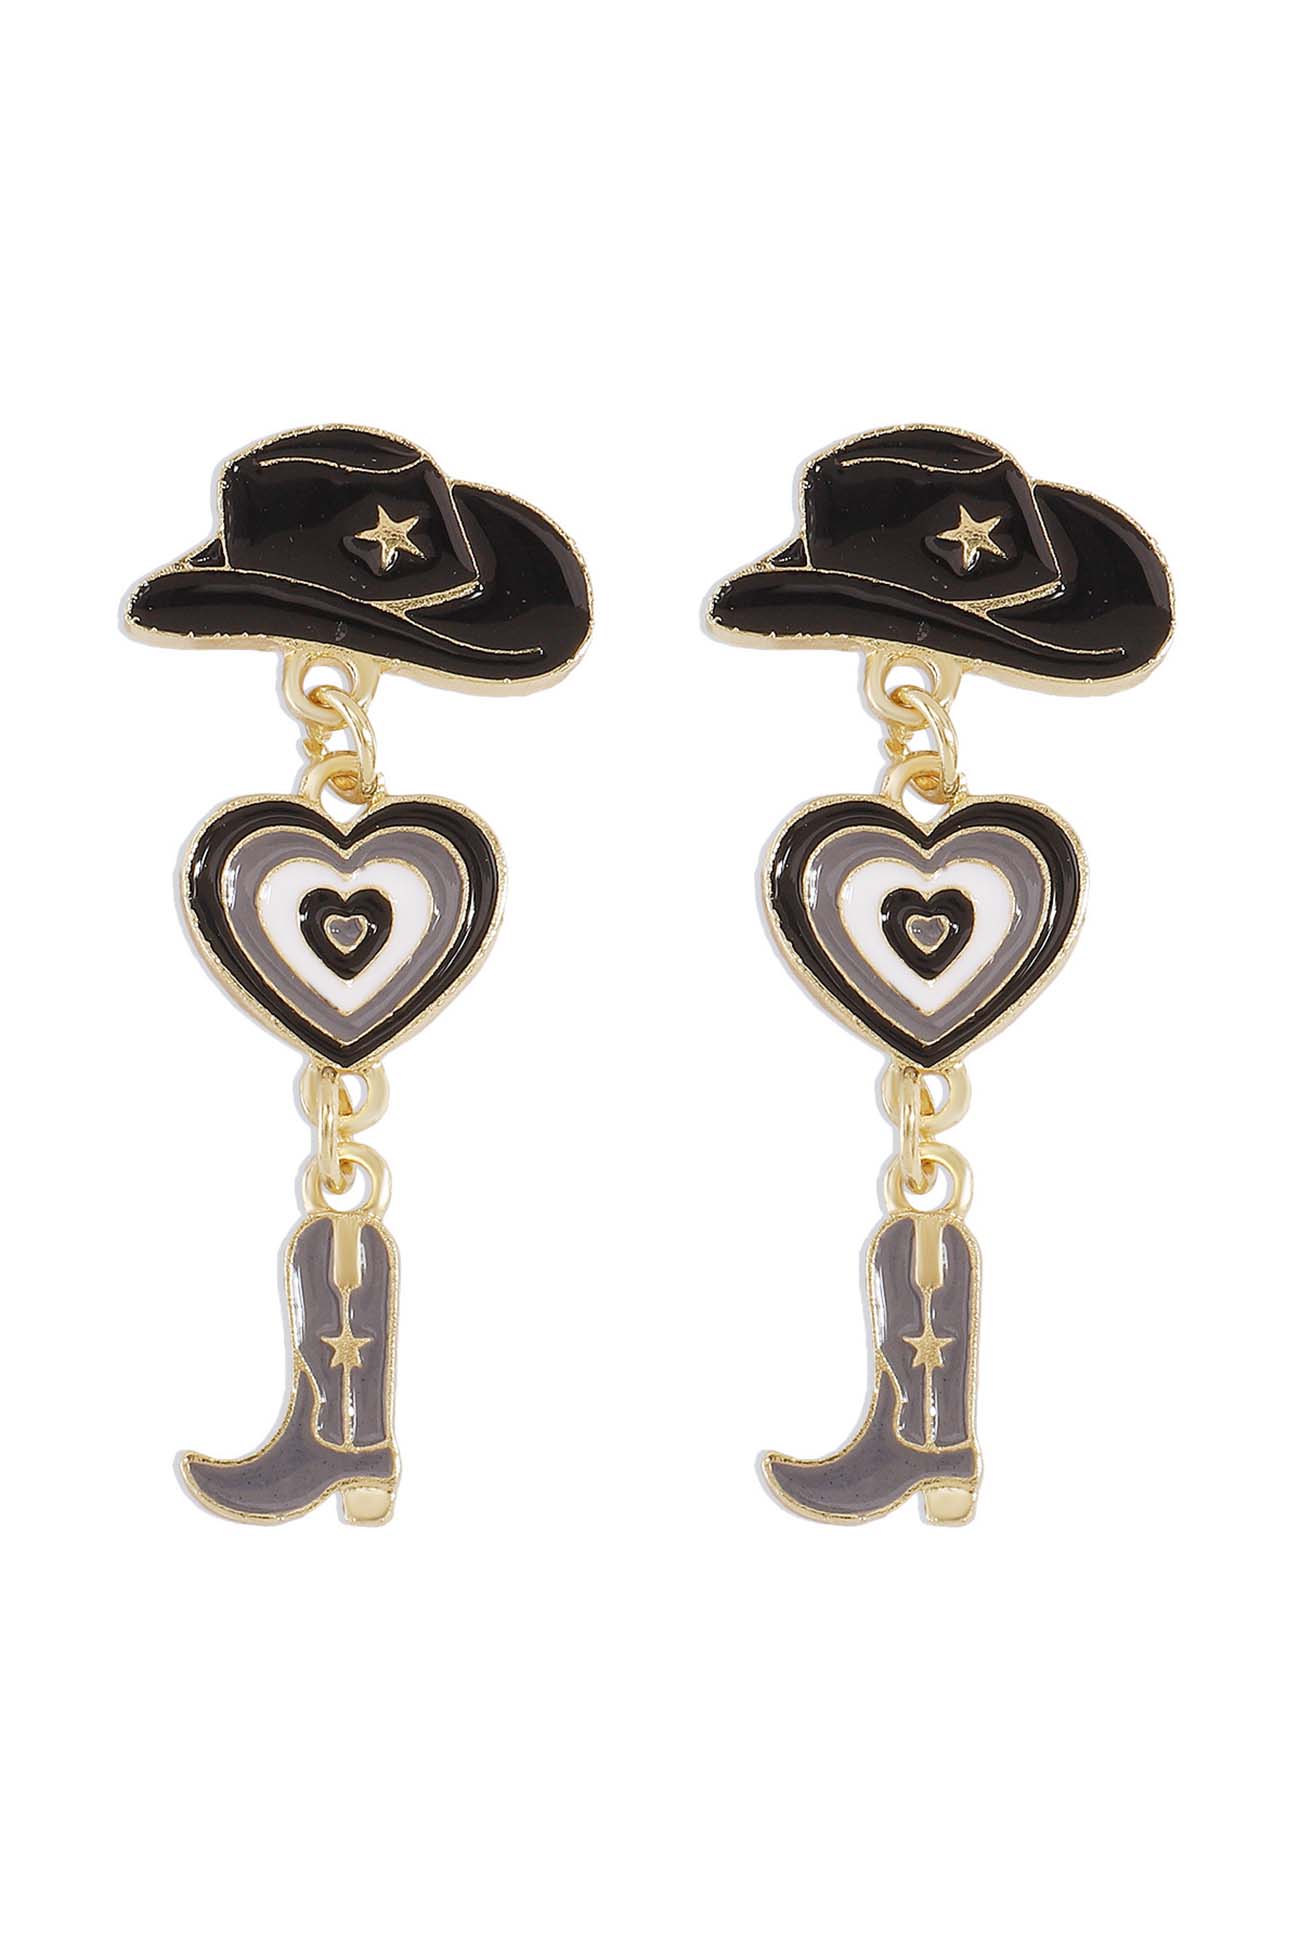 Flytonn-Valentine's Day gift Hat Heart Cowboy Boots Earrings